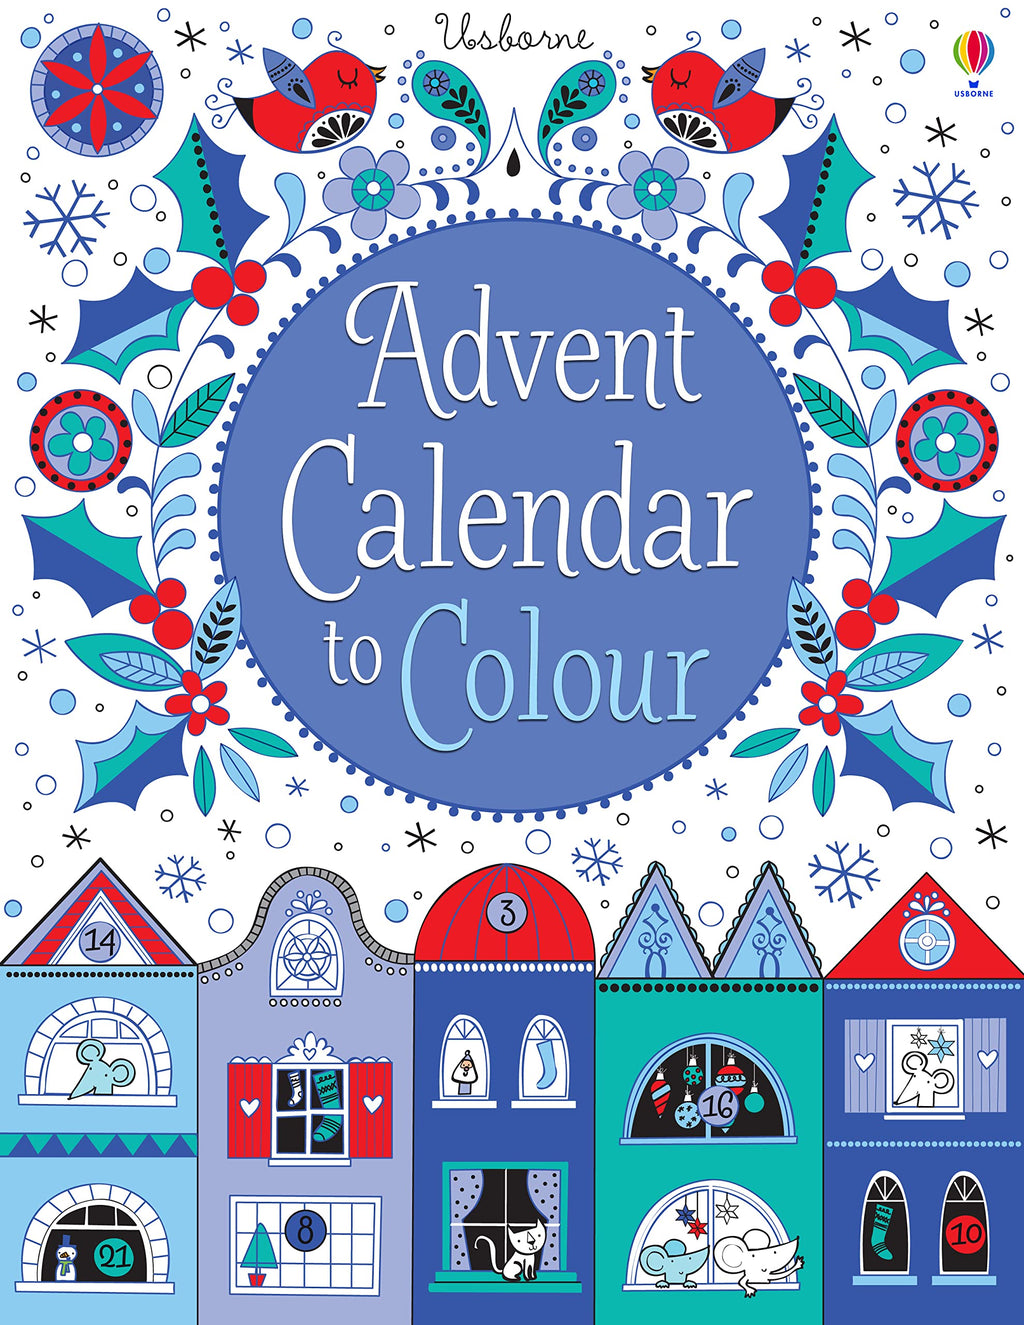 Advent Calendar to Colour - Lighten Up Shop